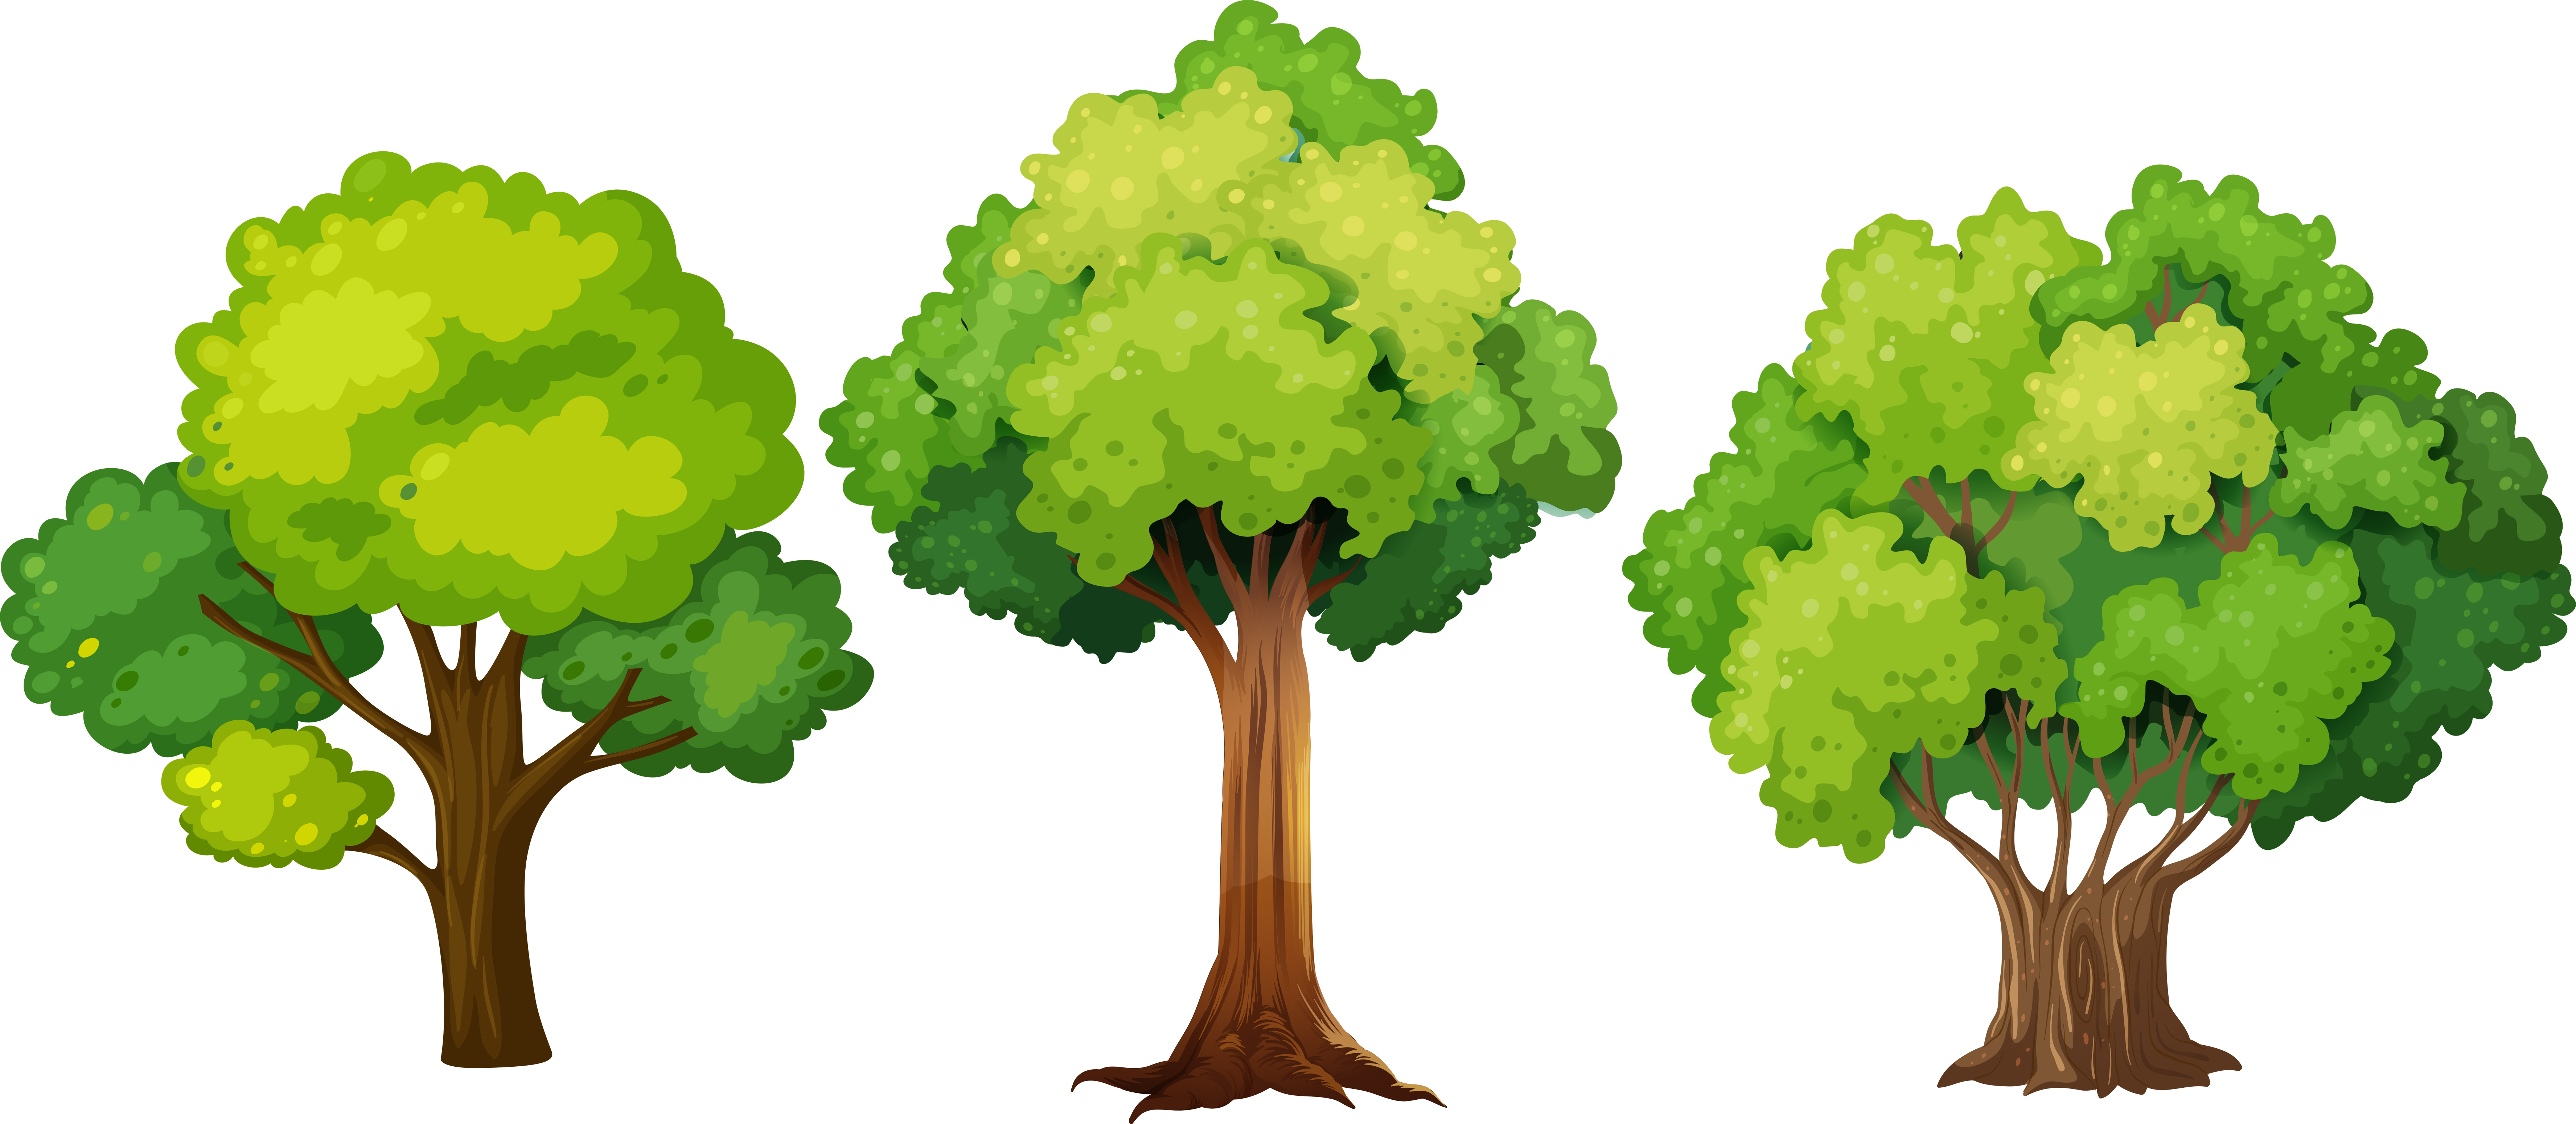 Set of different tree design